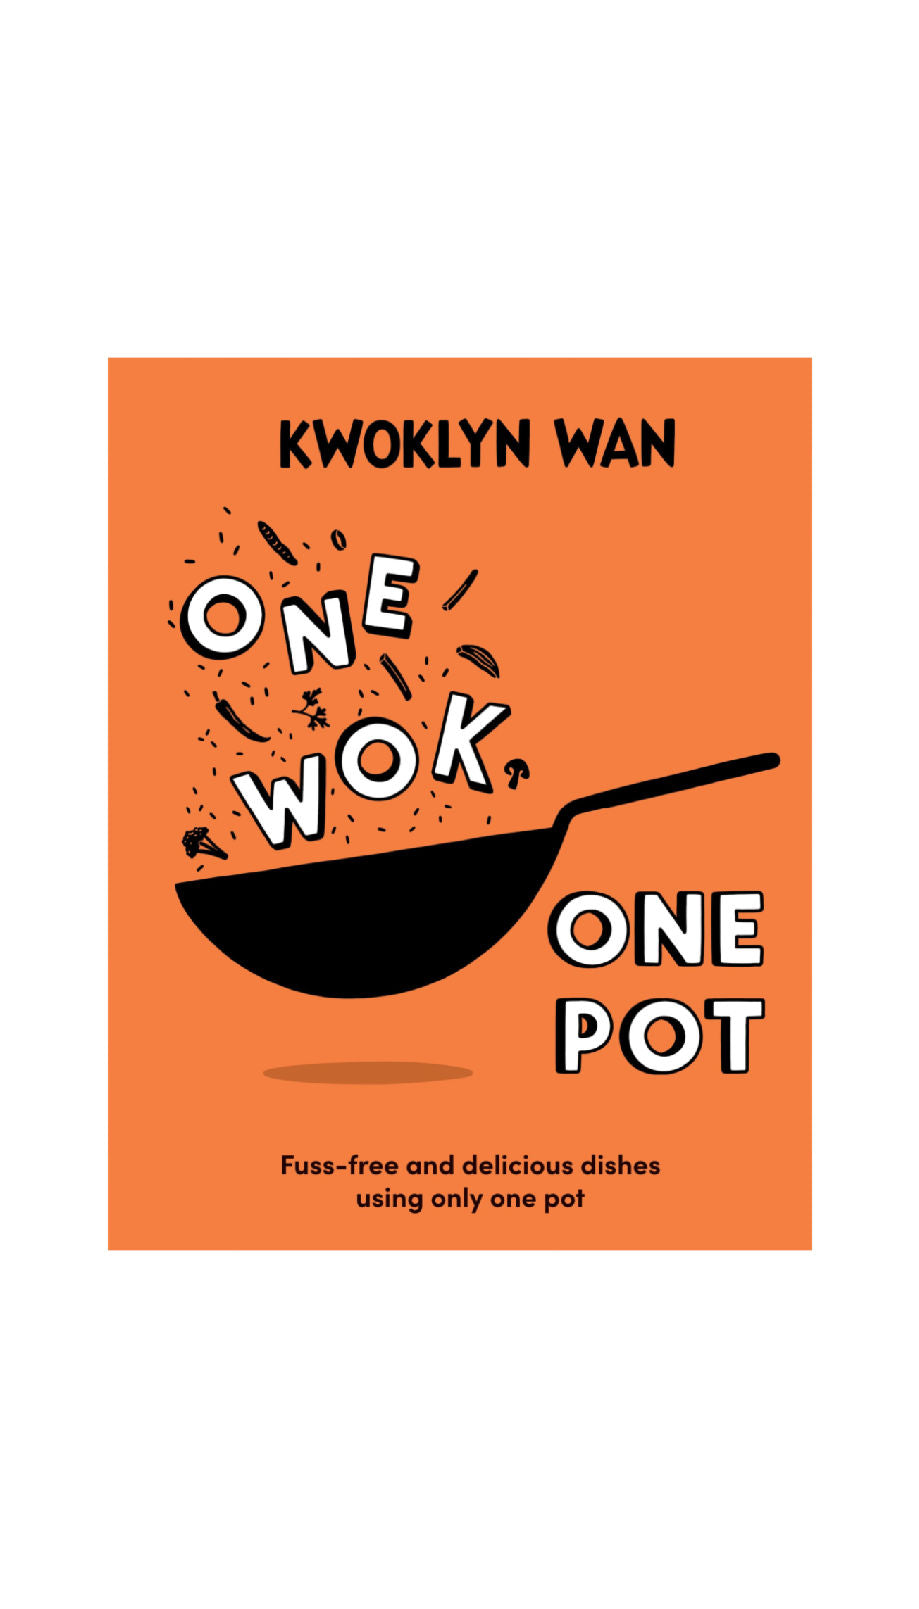 One Wok, One Pot / KWOKLYN WAN